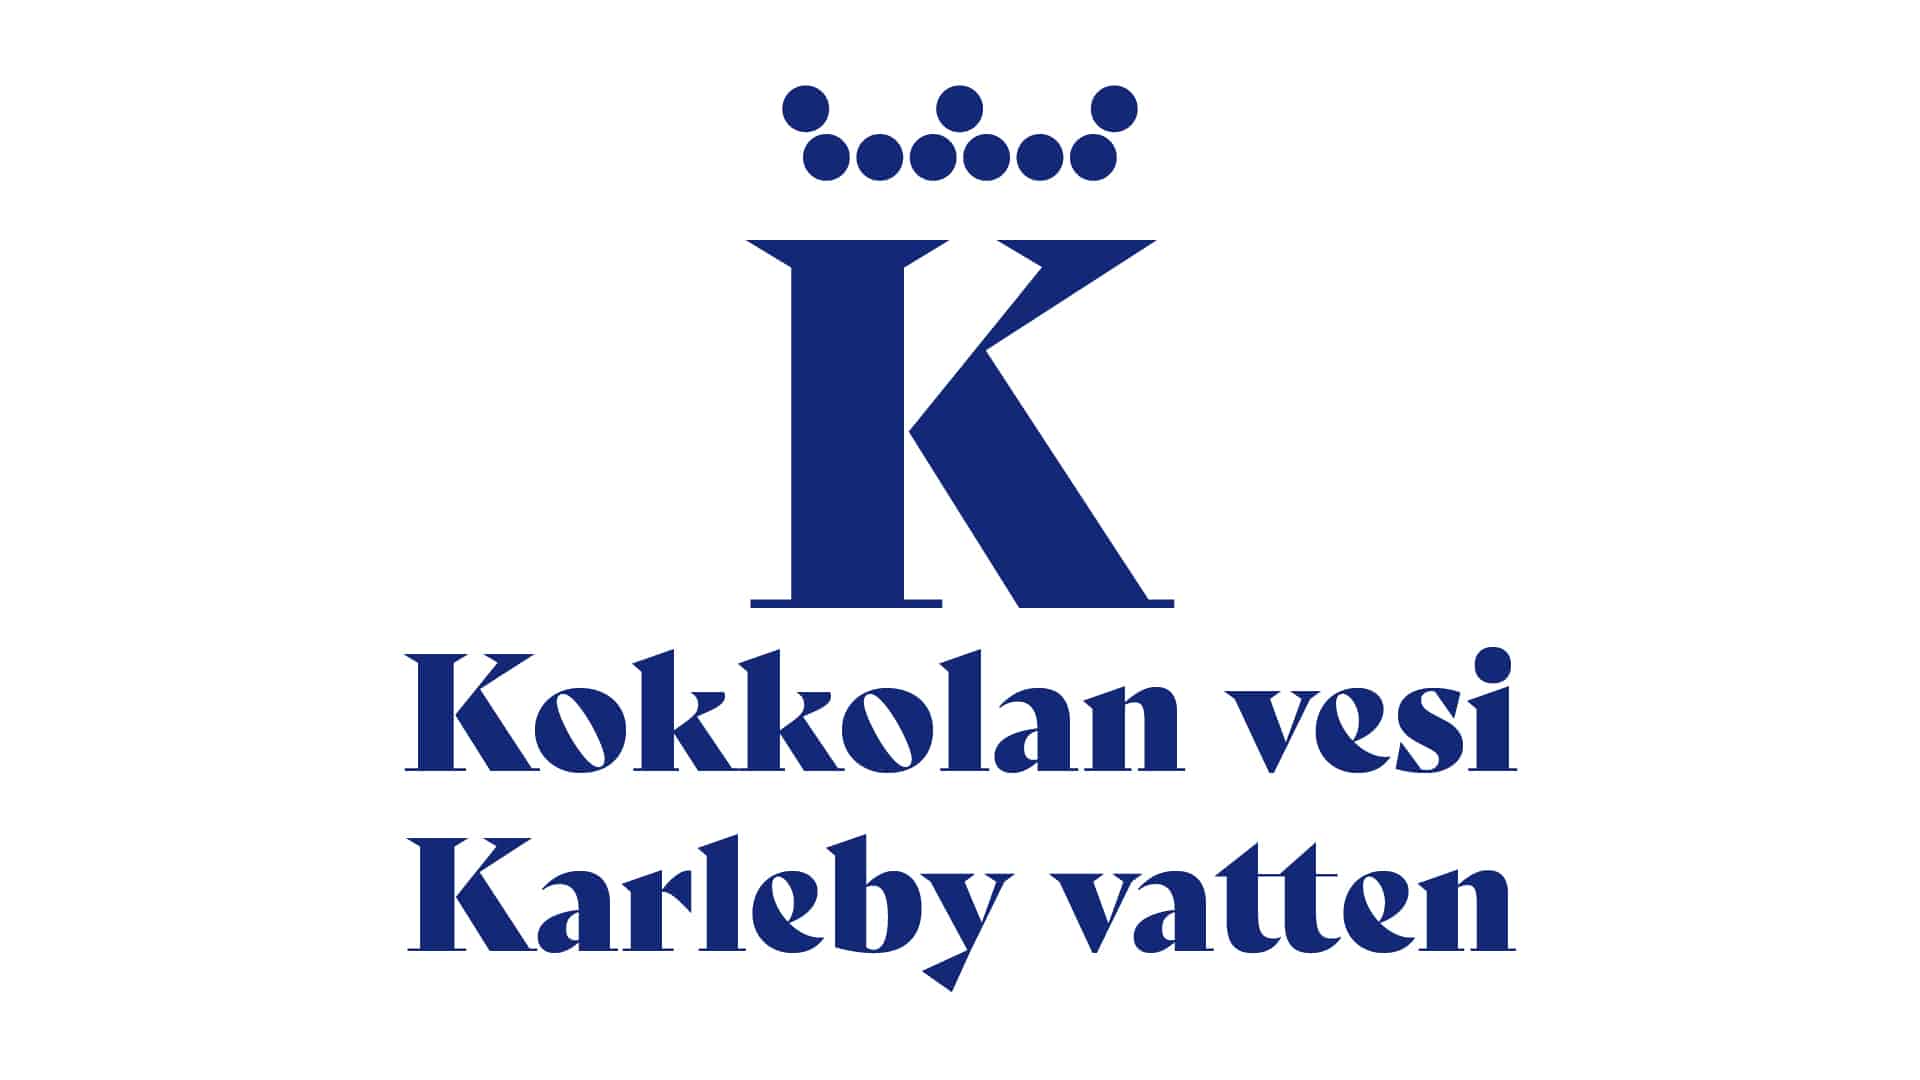 Karleby Vattens logo